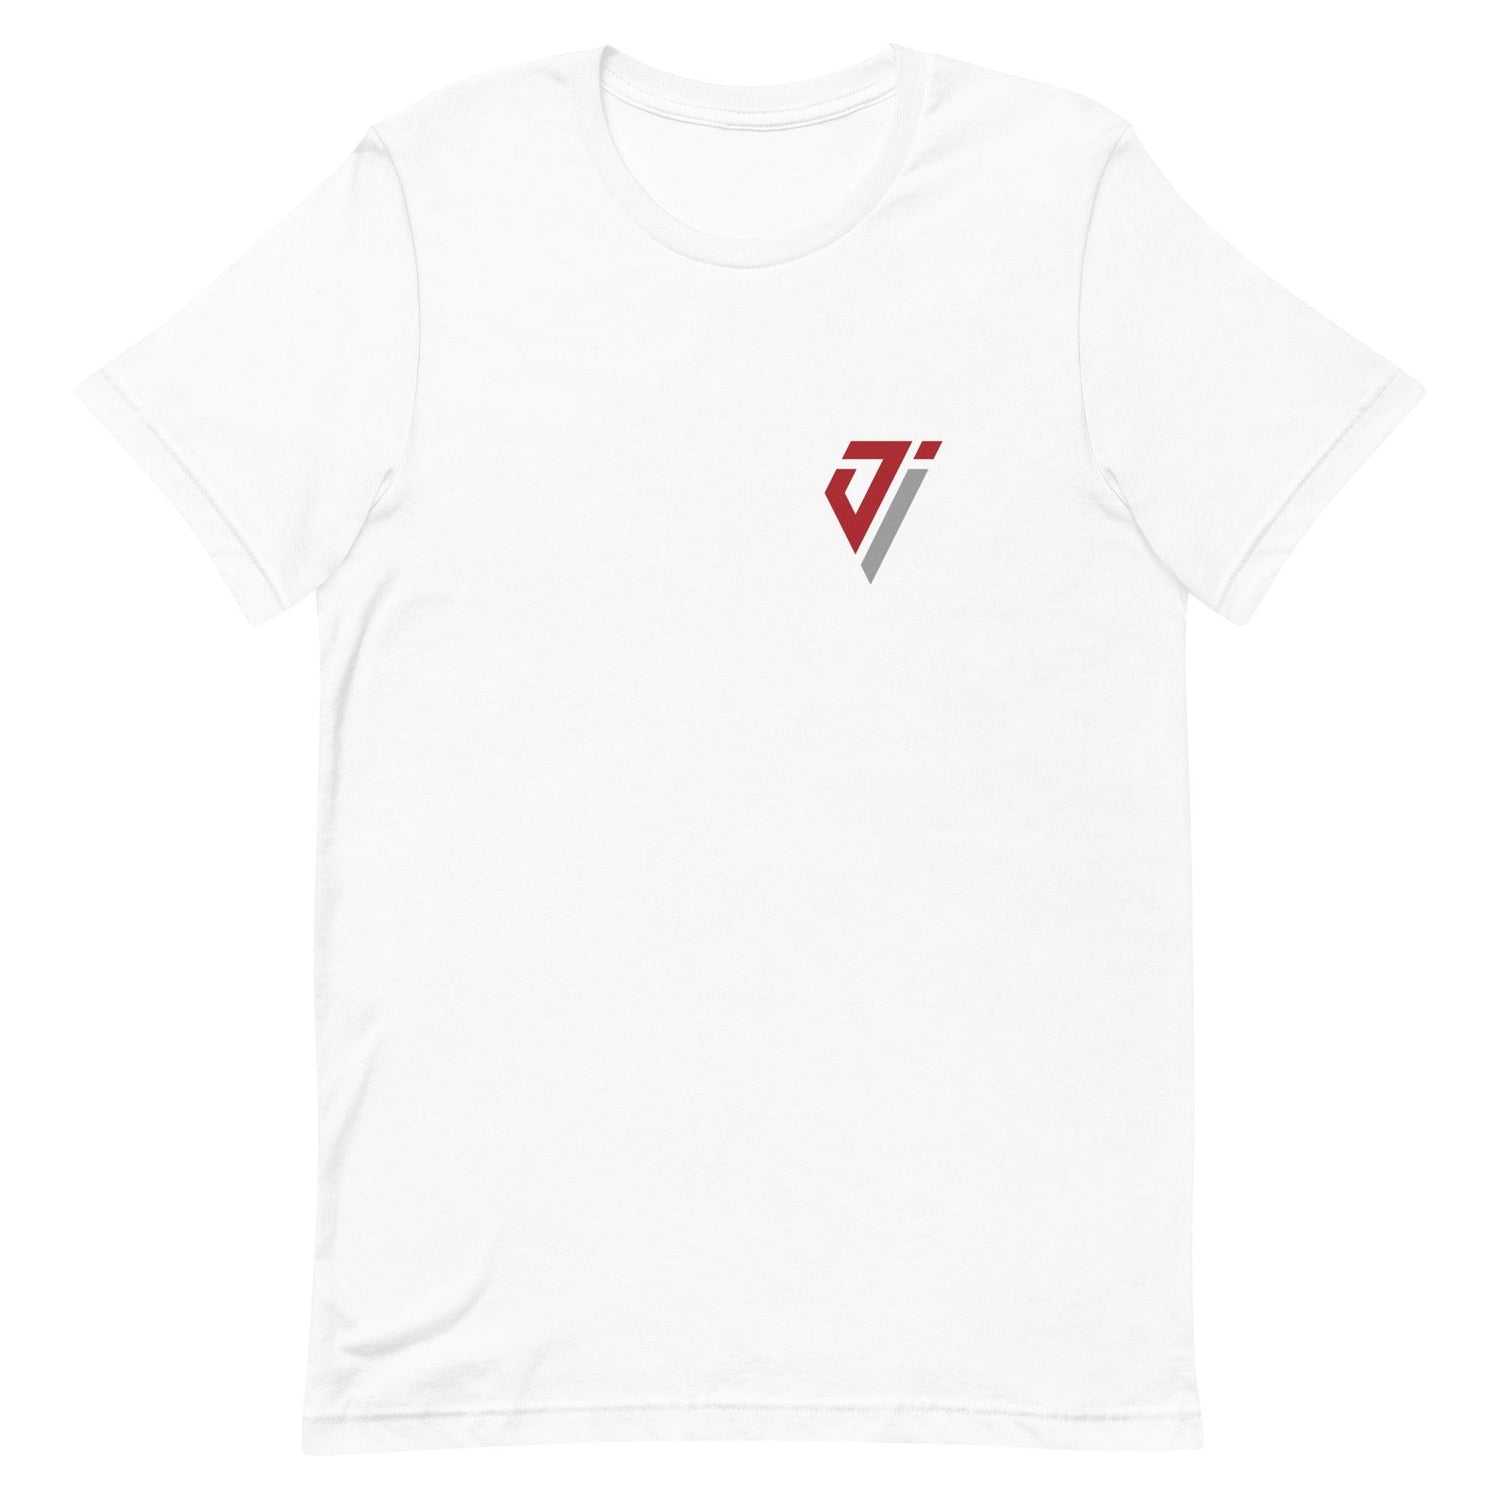 Jimond Ivey "Essential" t-shirt - Fan Arch